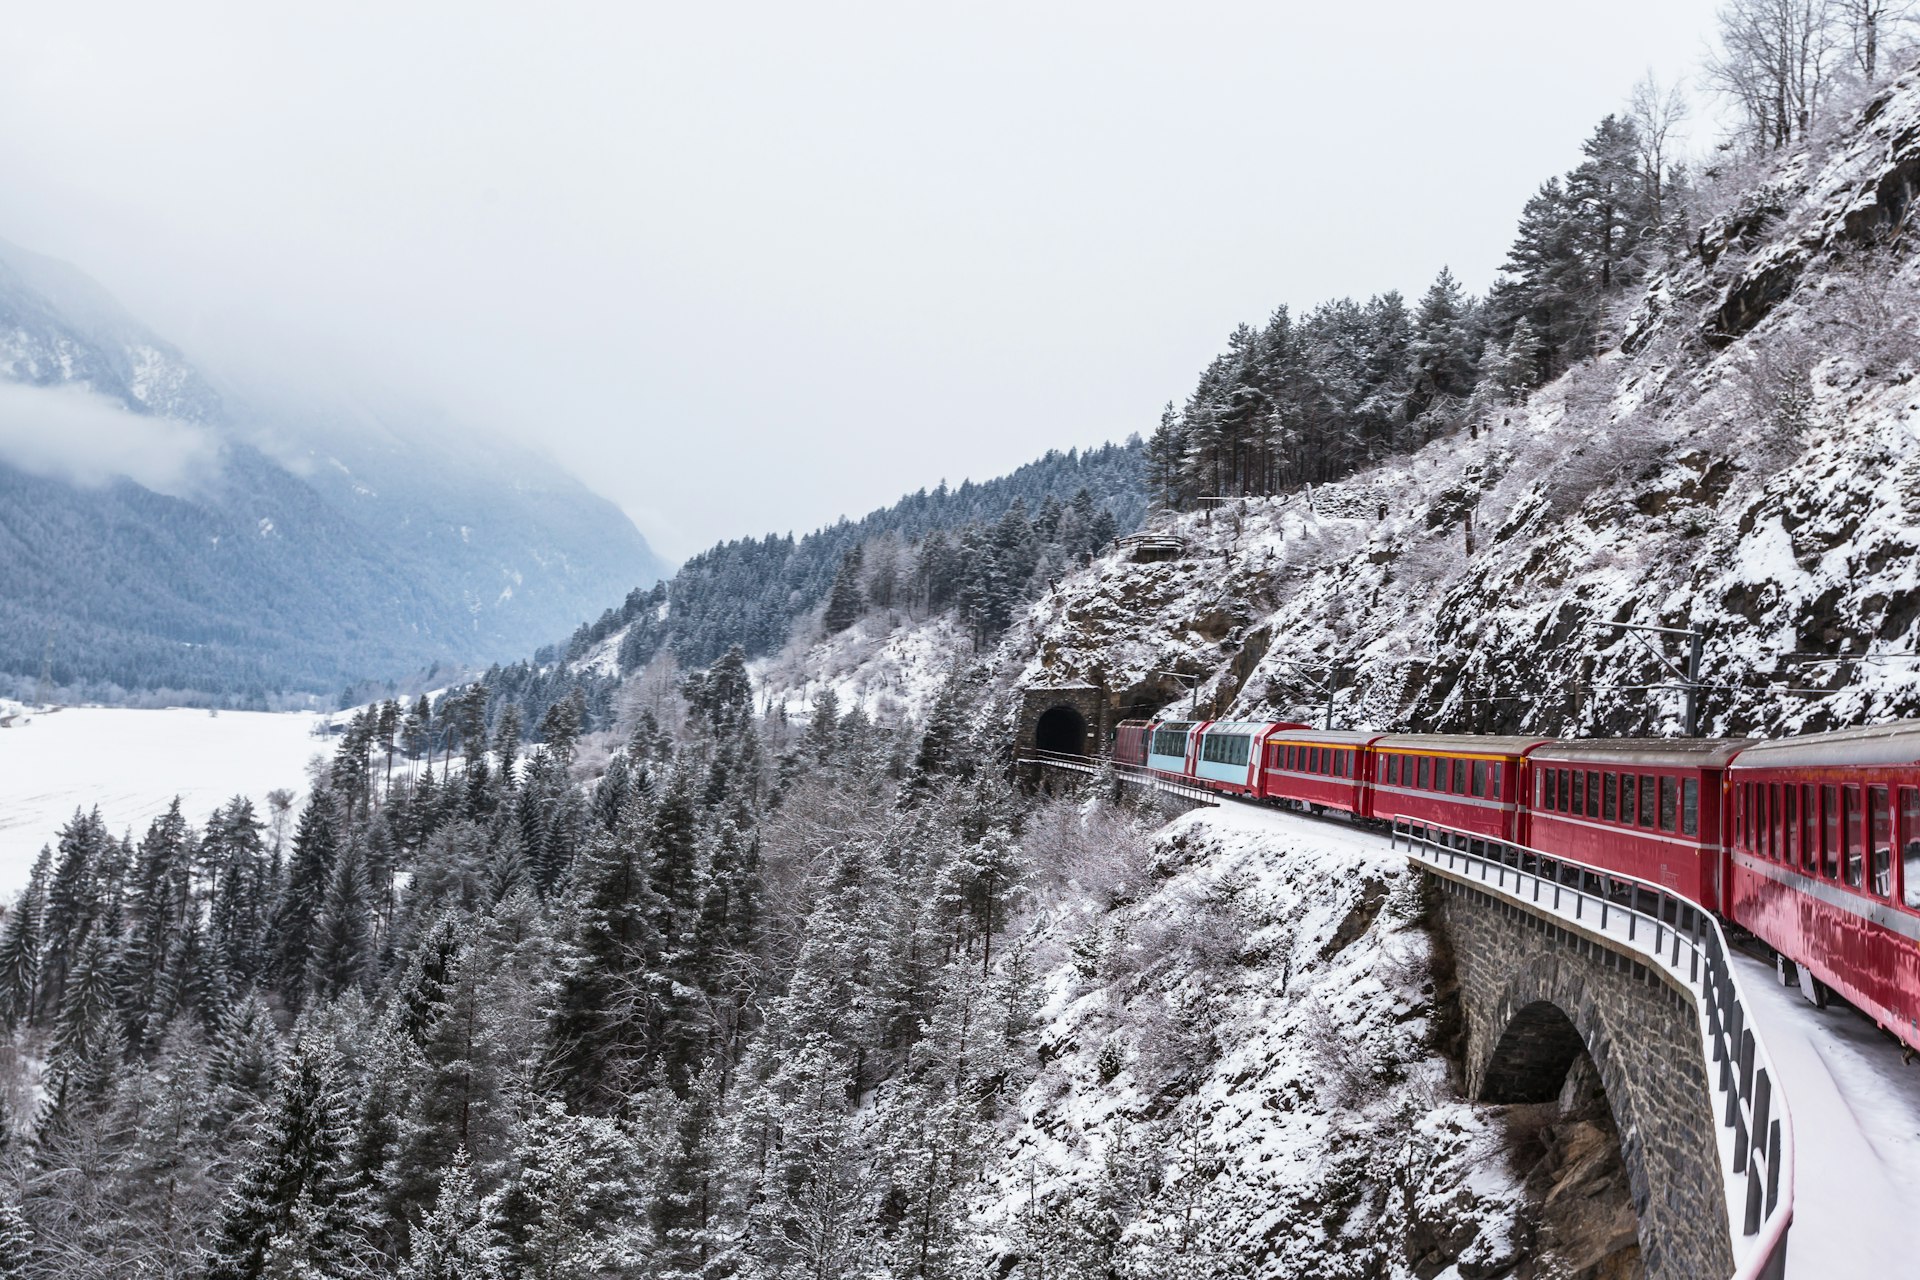 A train enters a tunnel in a snowy landscape in Switzerland. 